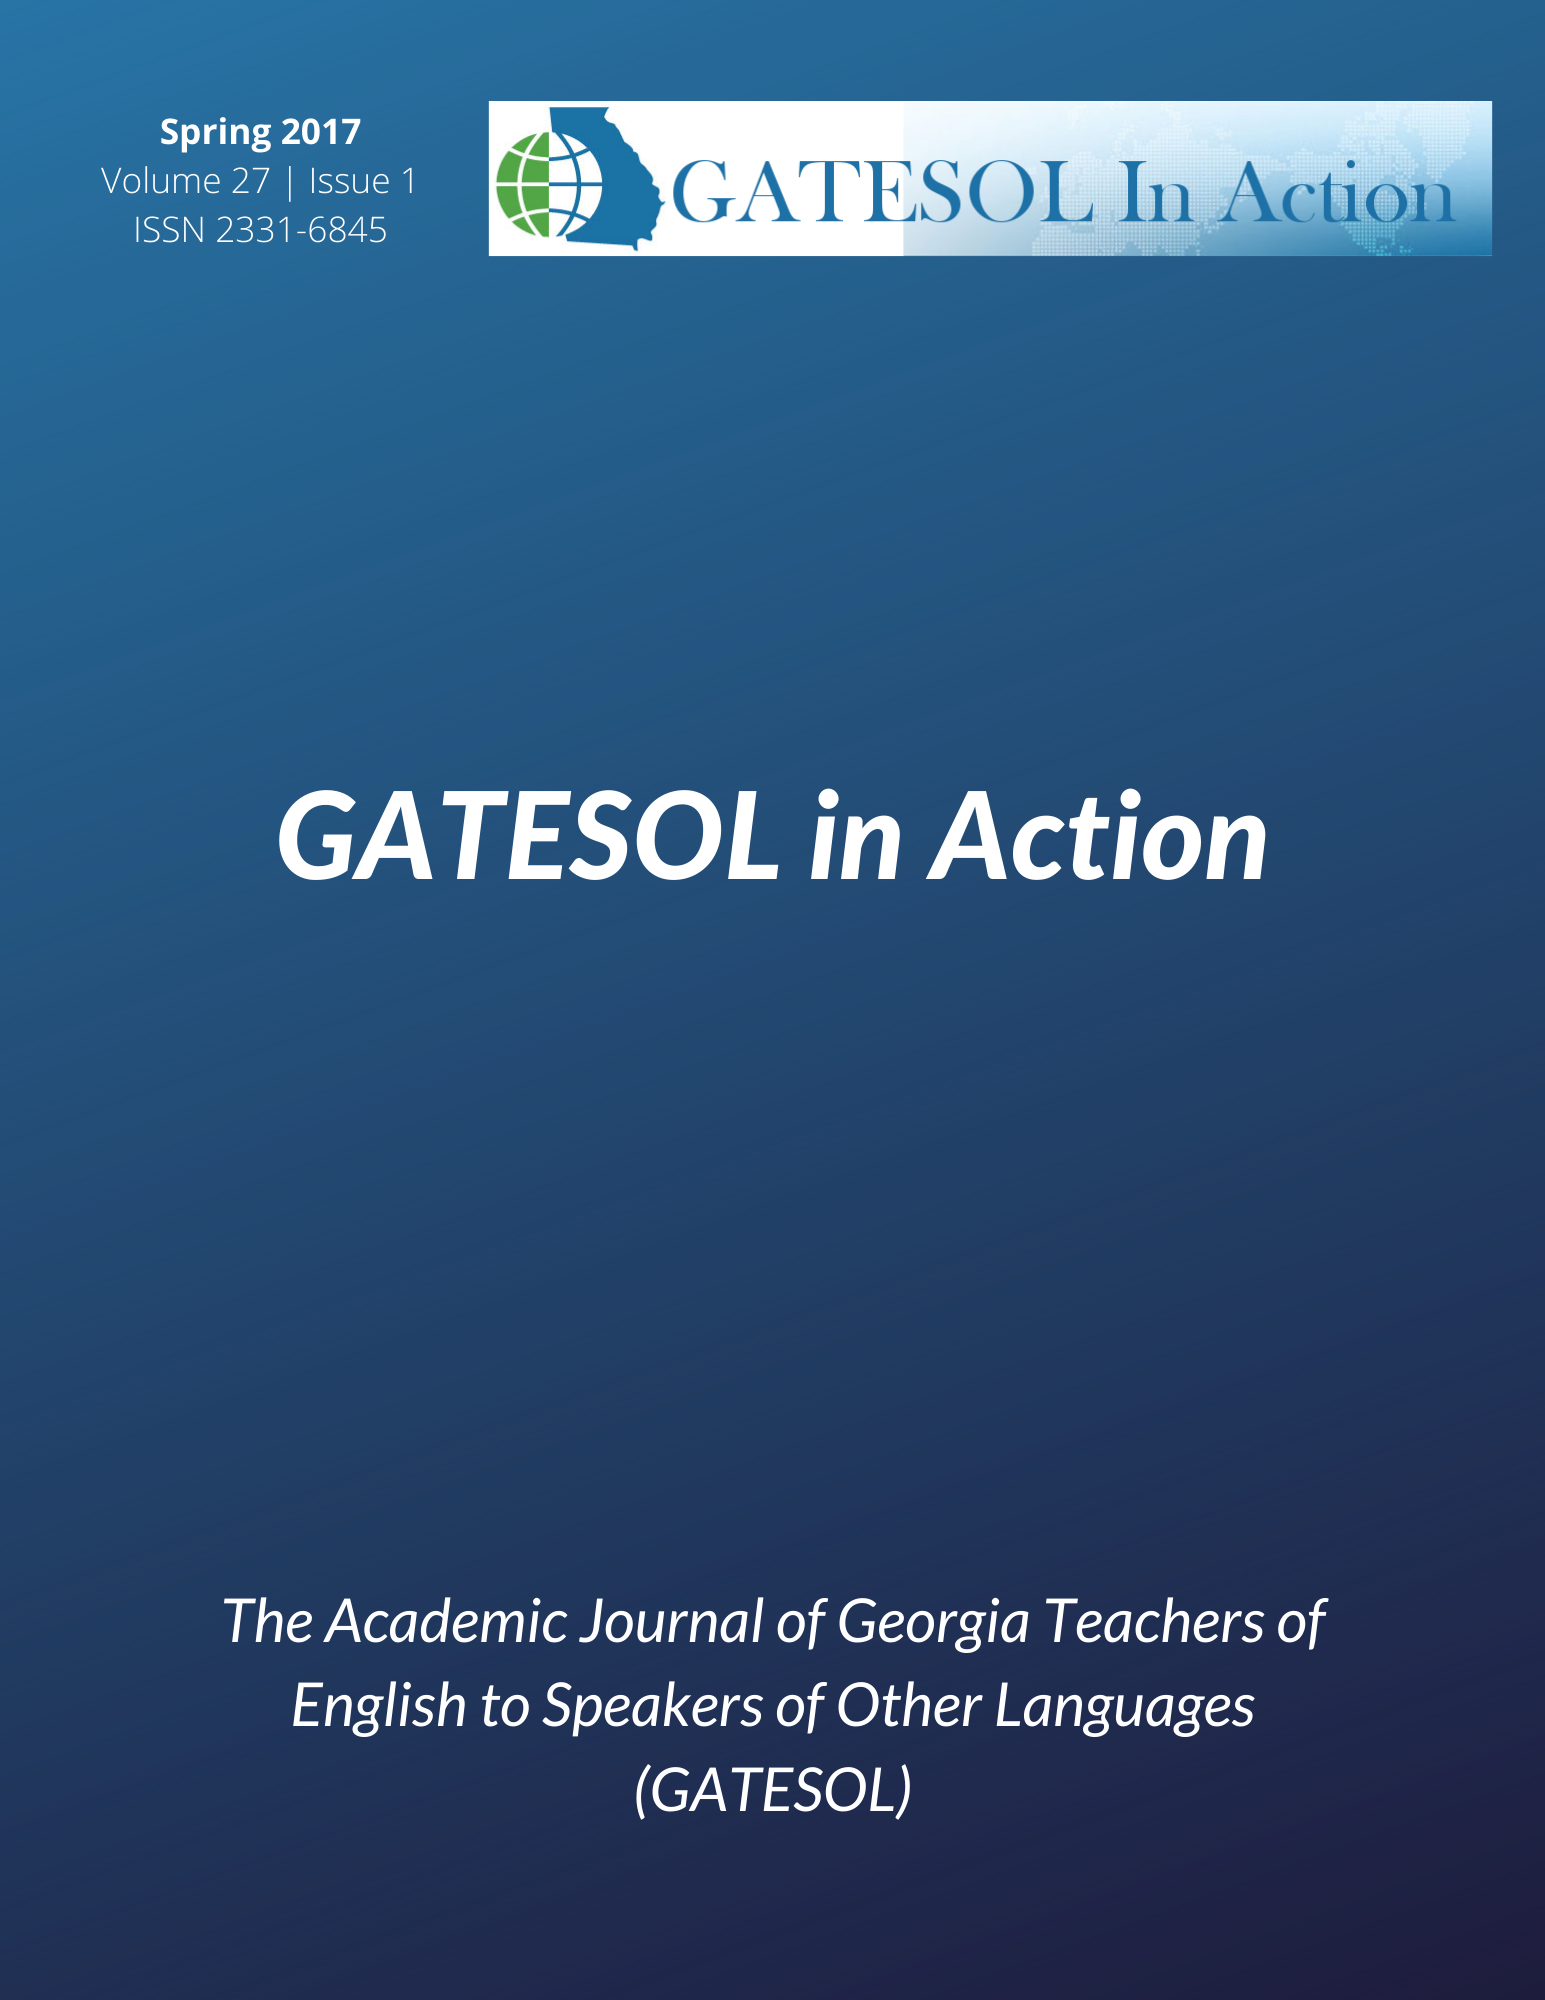 GATESOL in Action (Spring 2017, Volume 27, Issue 1)